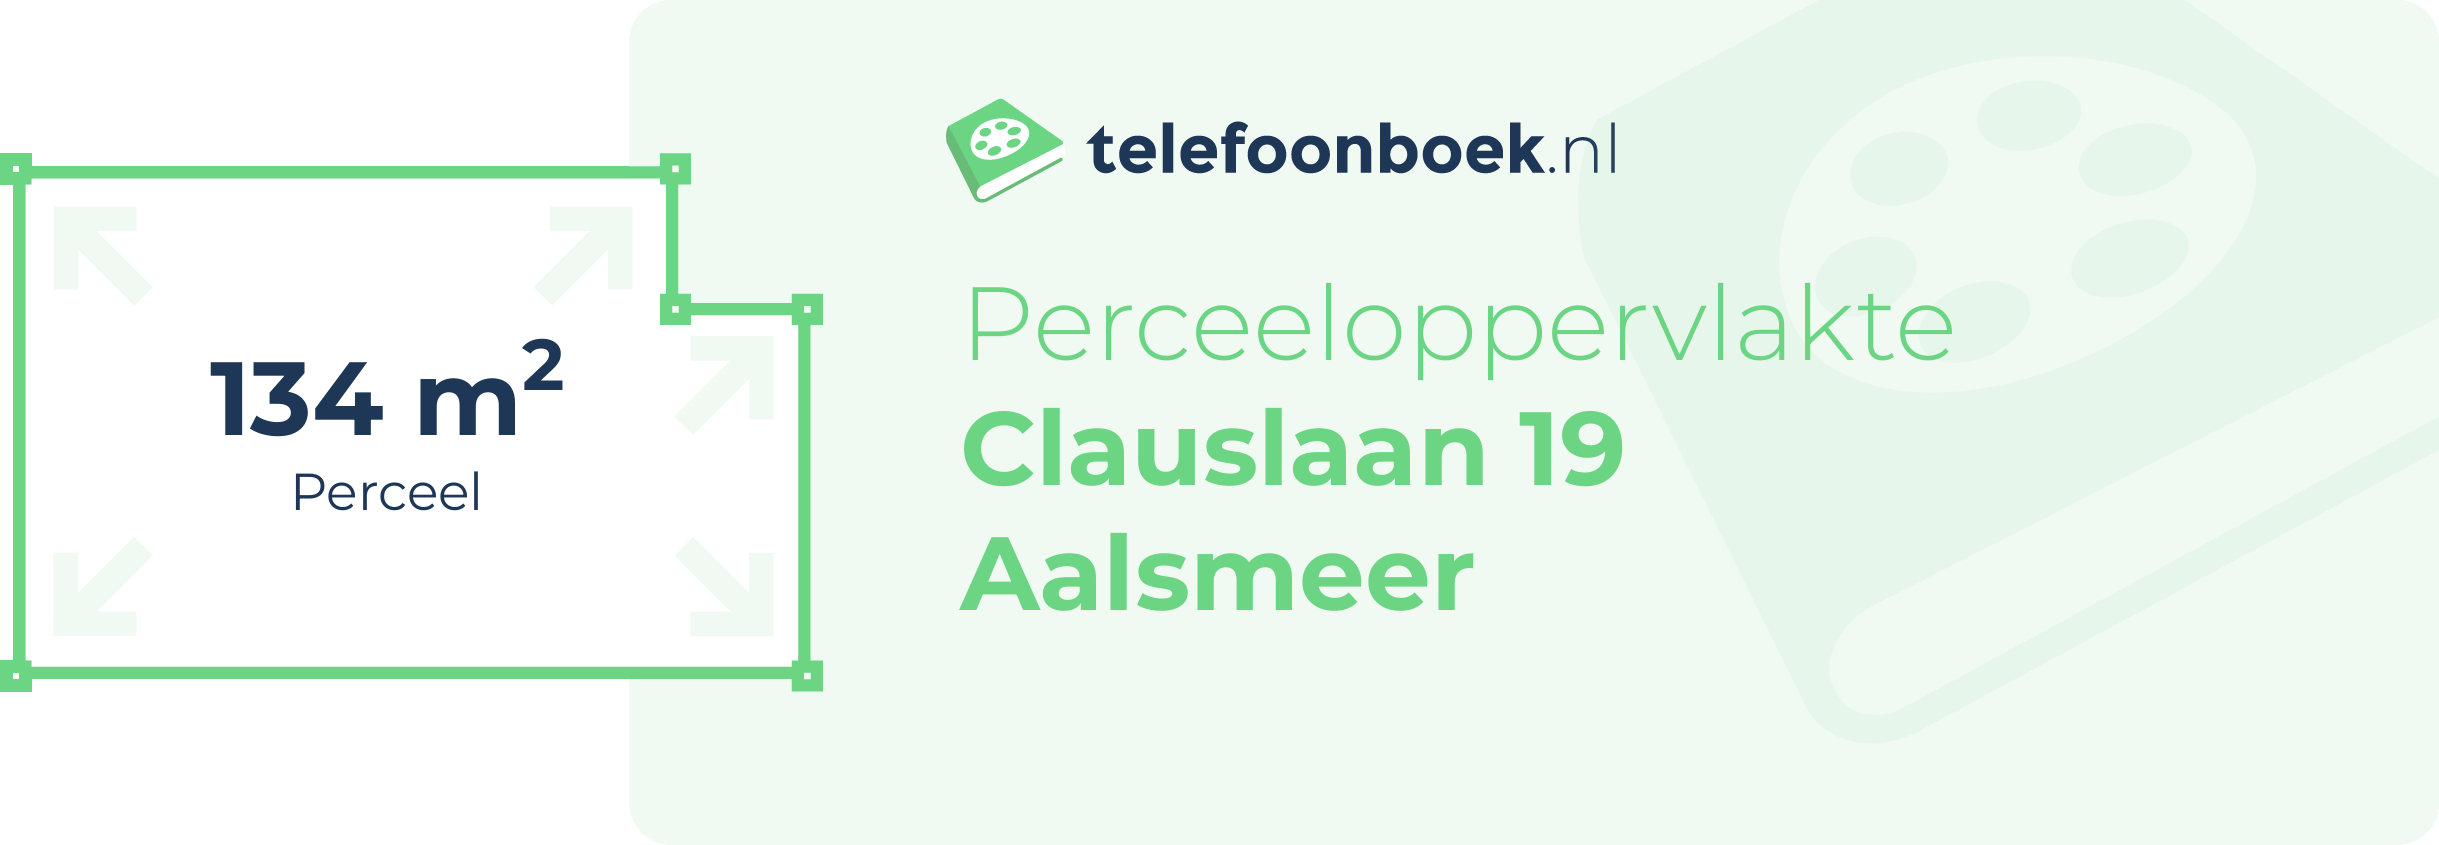 Perceeloppervlakte Clauslaan 19 Aalsmeer